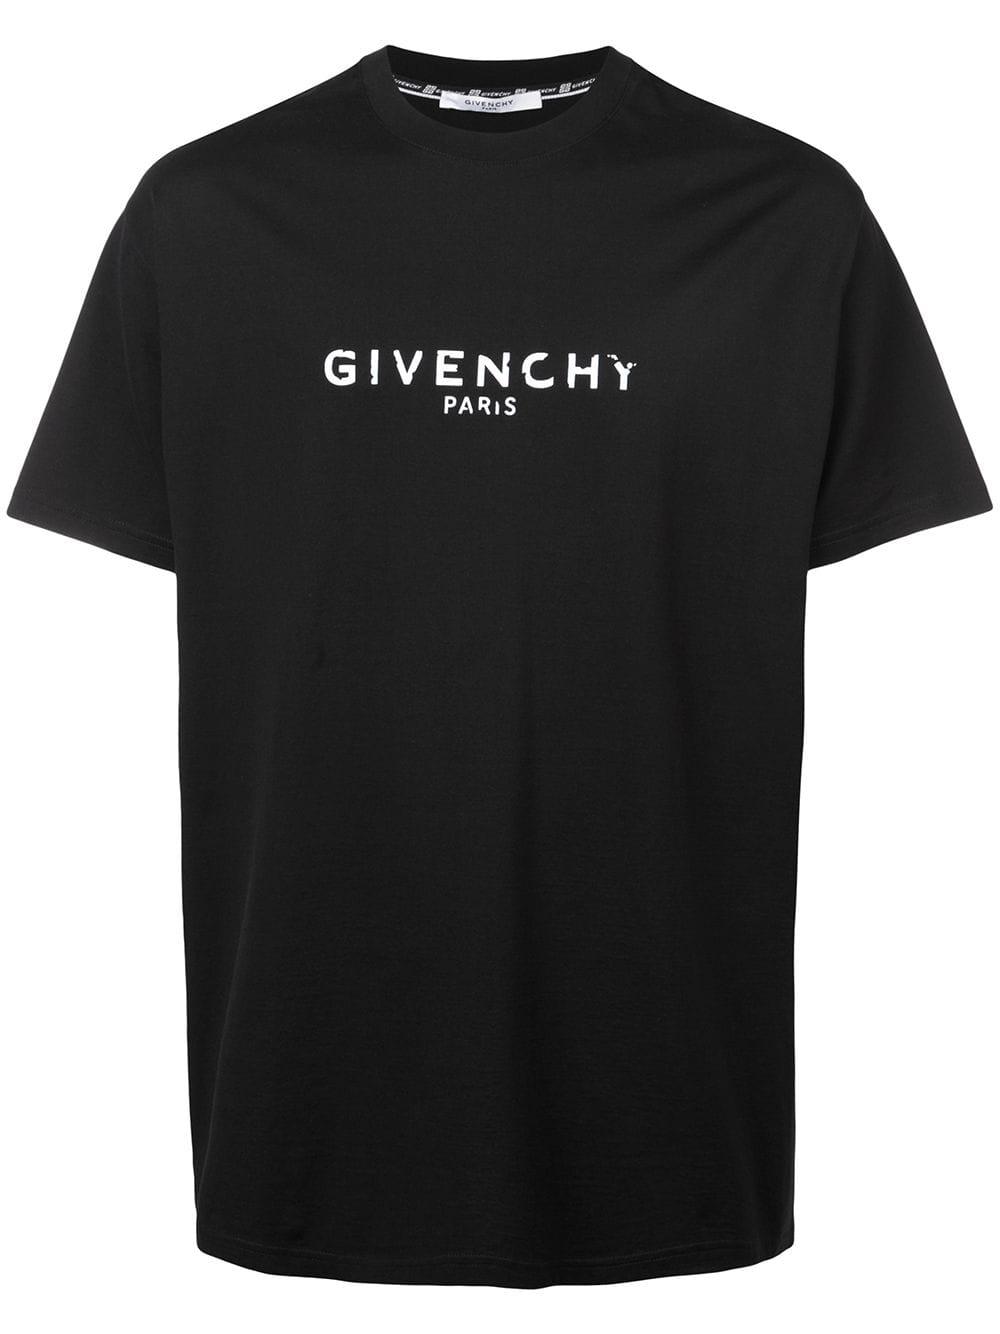 Givenchy Cotton Paris Vintage Oversized T-shirt in Black for Men - Save ...